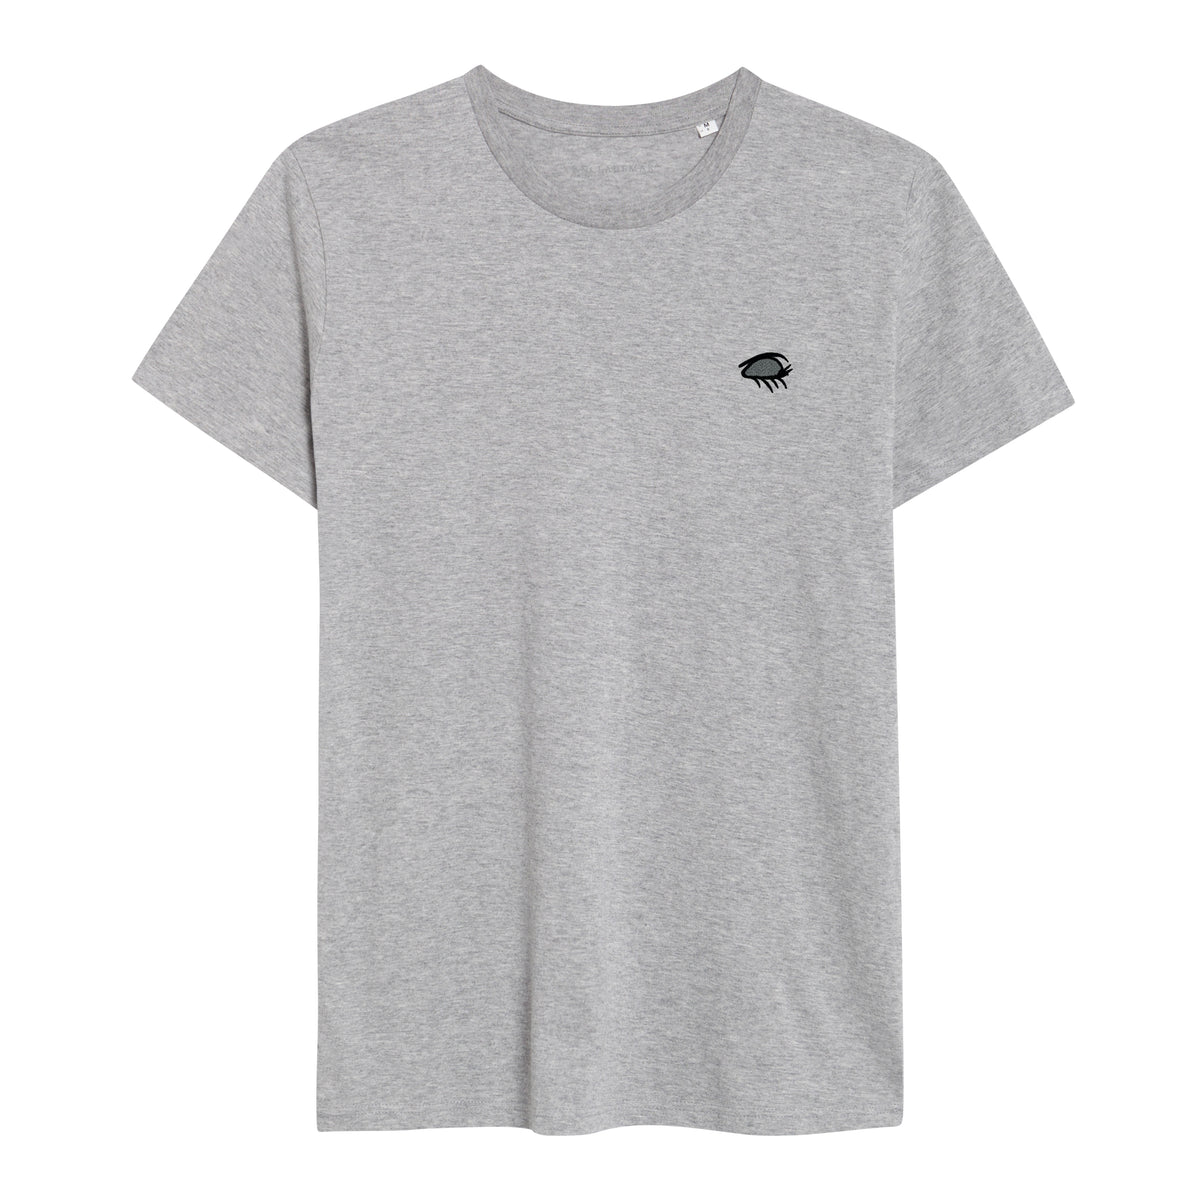 Grey T-Shirt. Eye